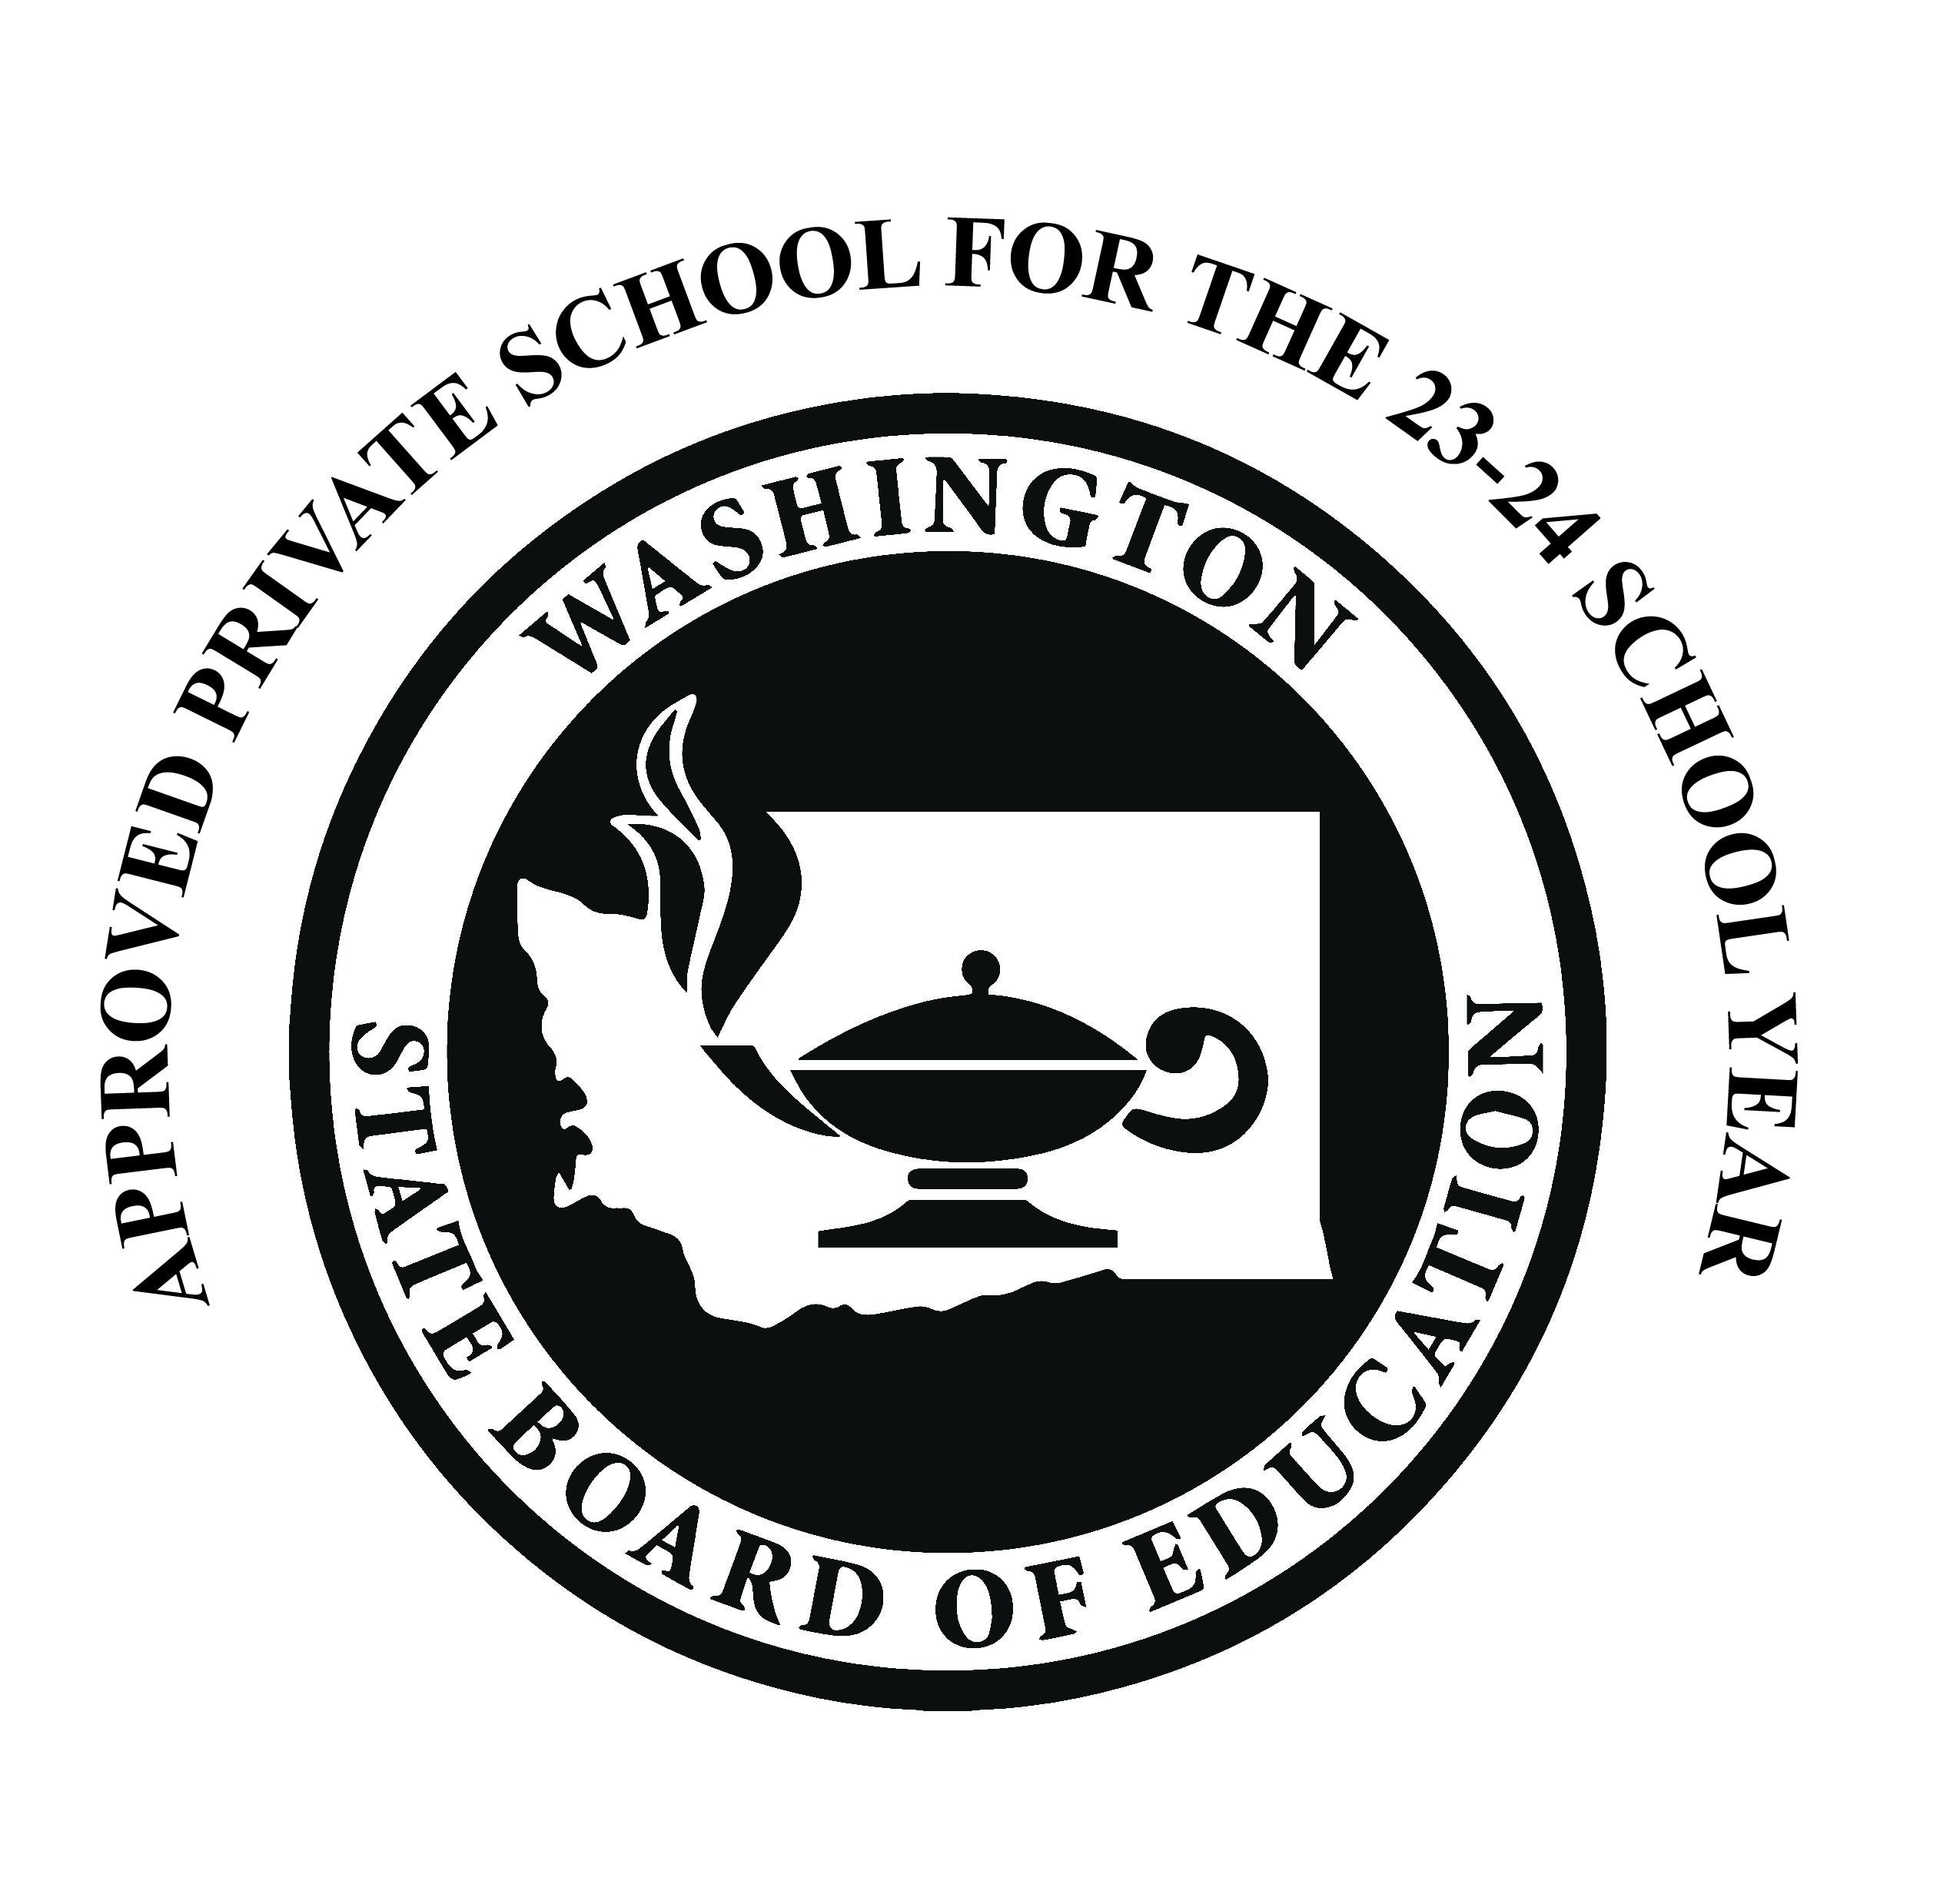 The Washington State Board of Education